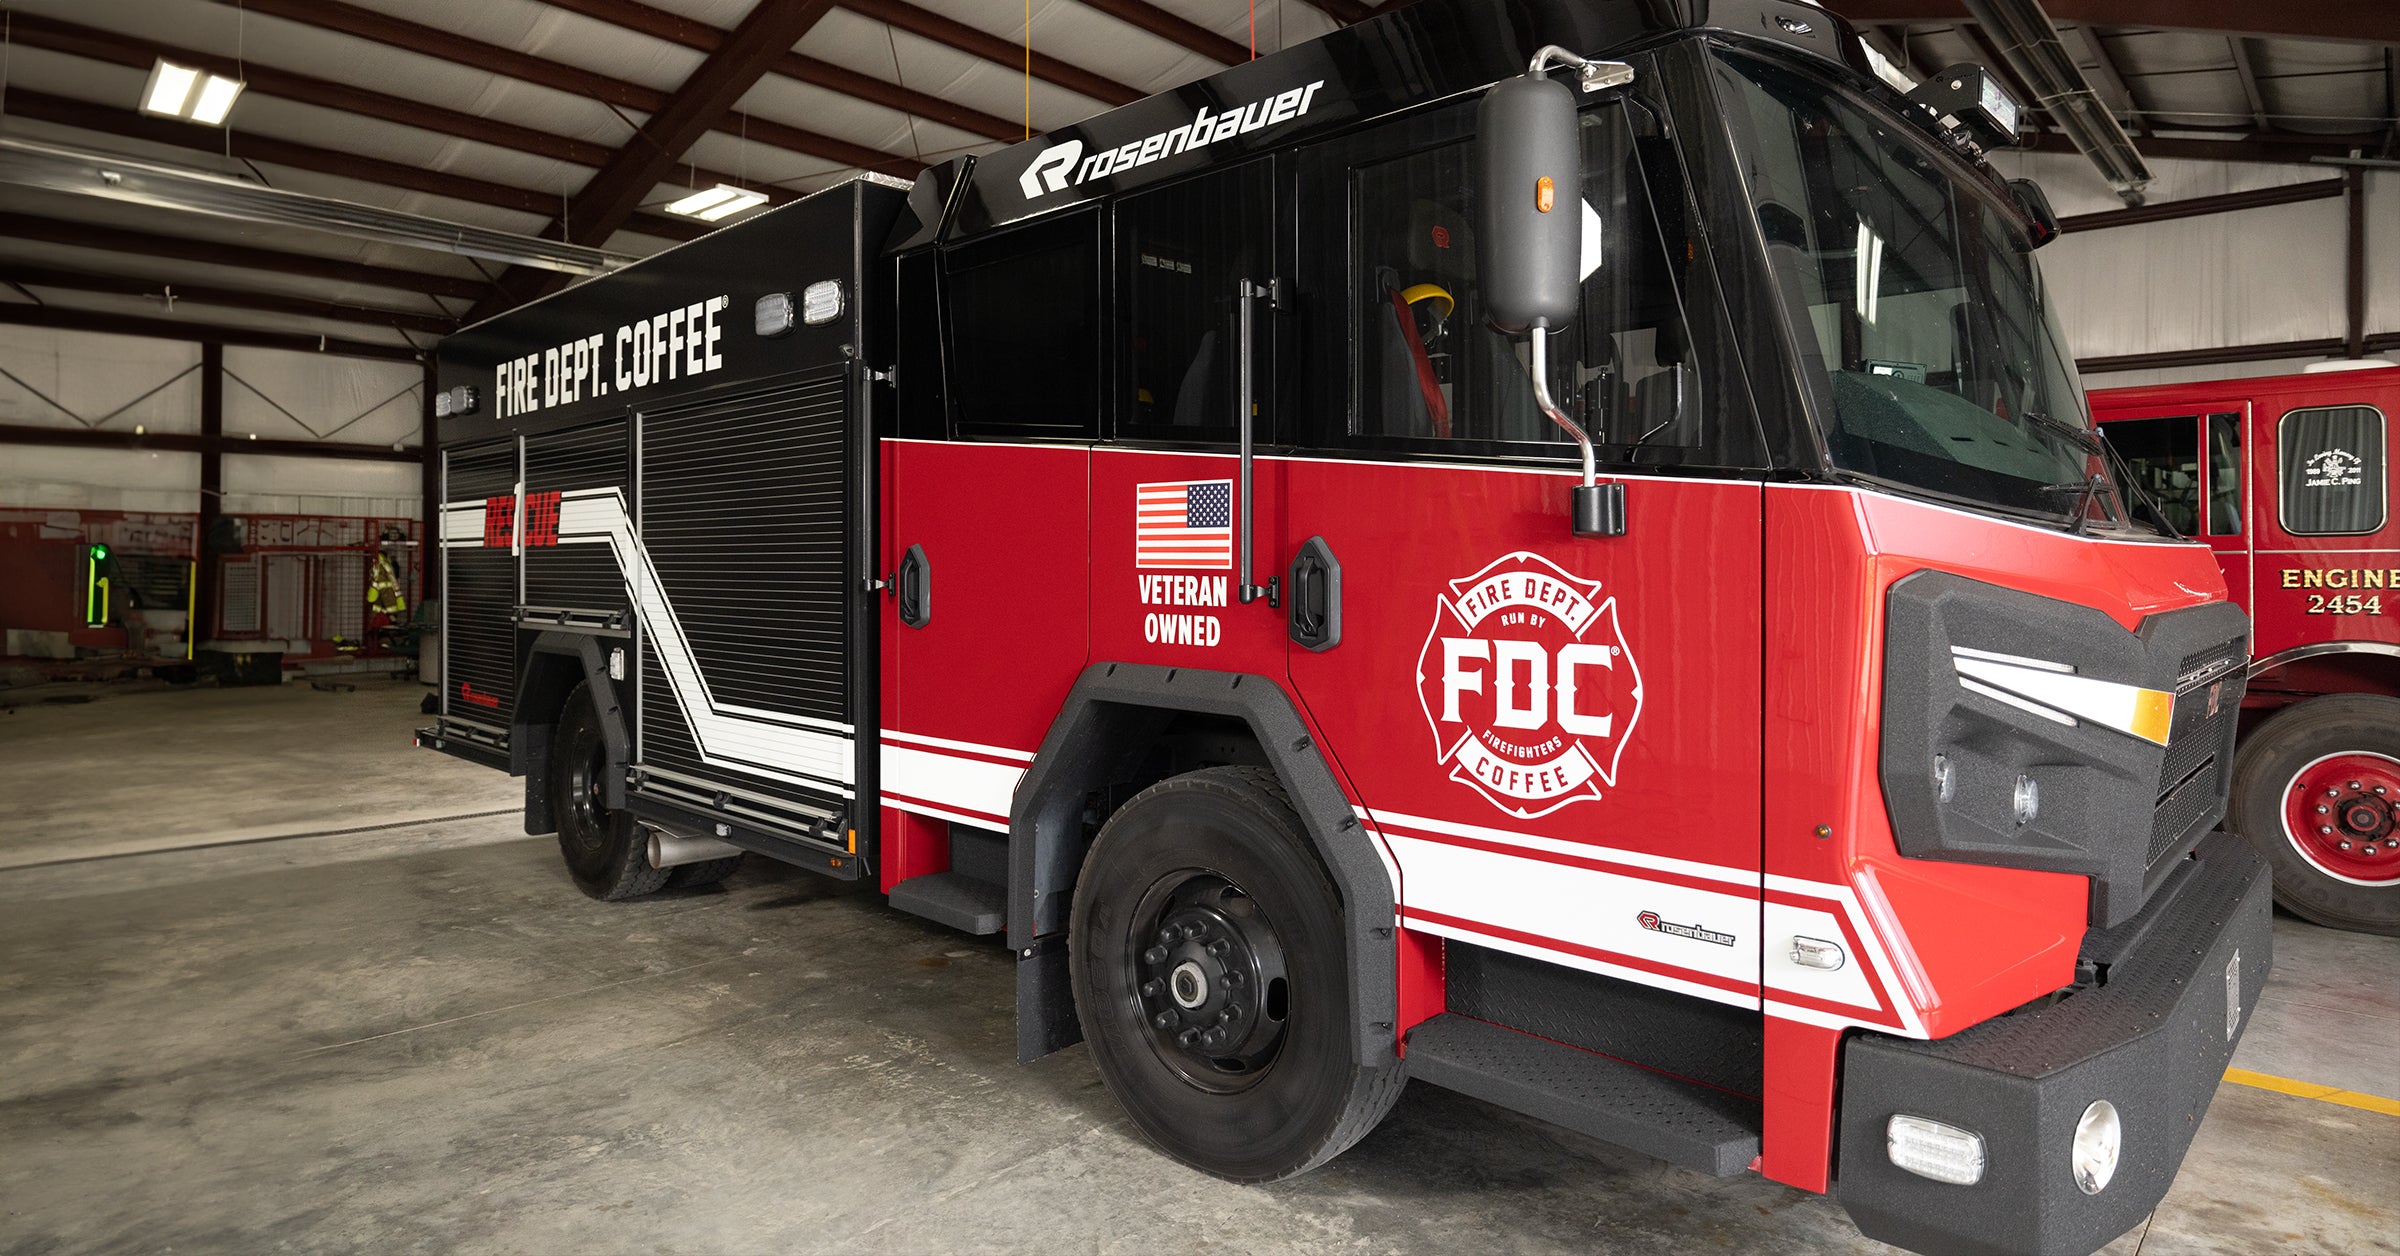 FDC's Rosenbauer Fire Truck is Ready to Serve Communities - Fire